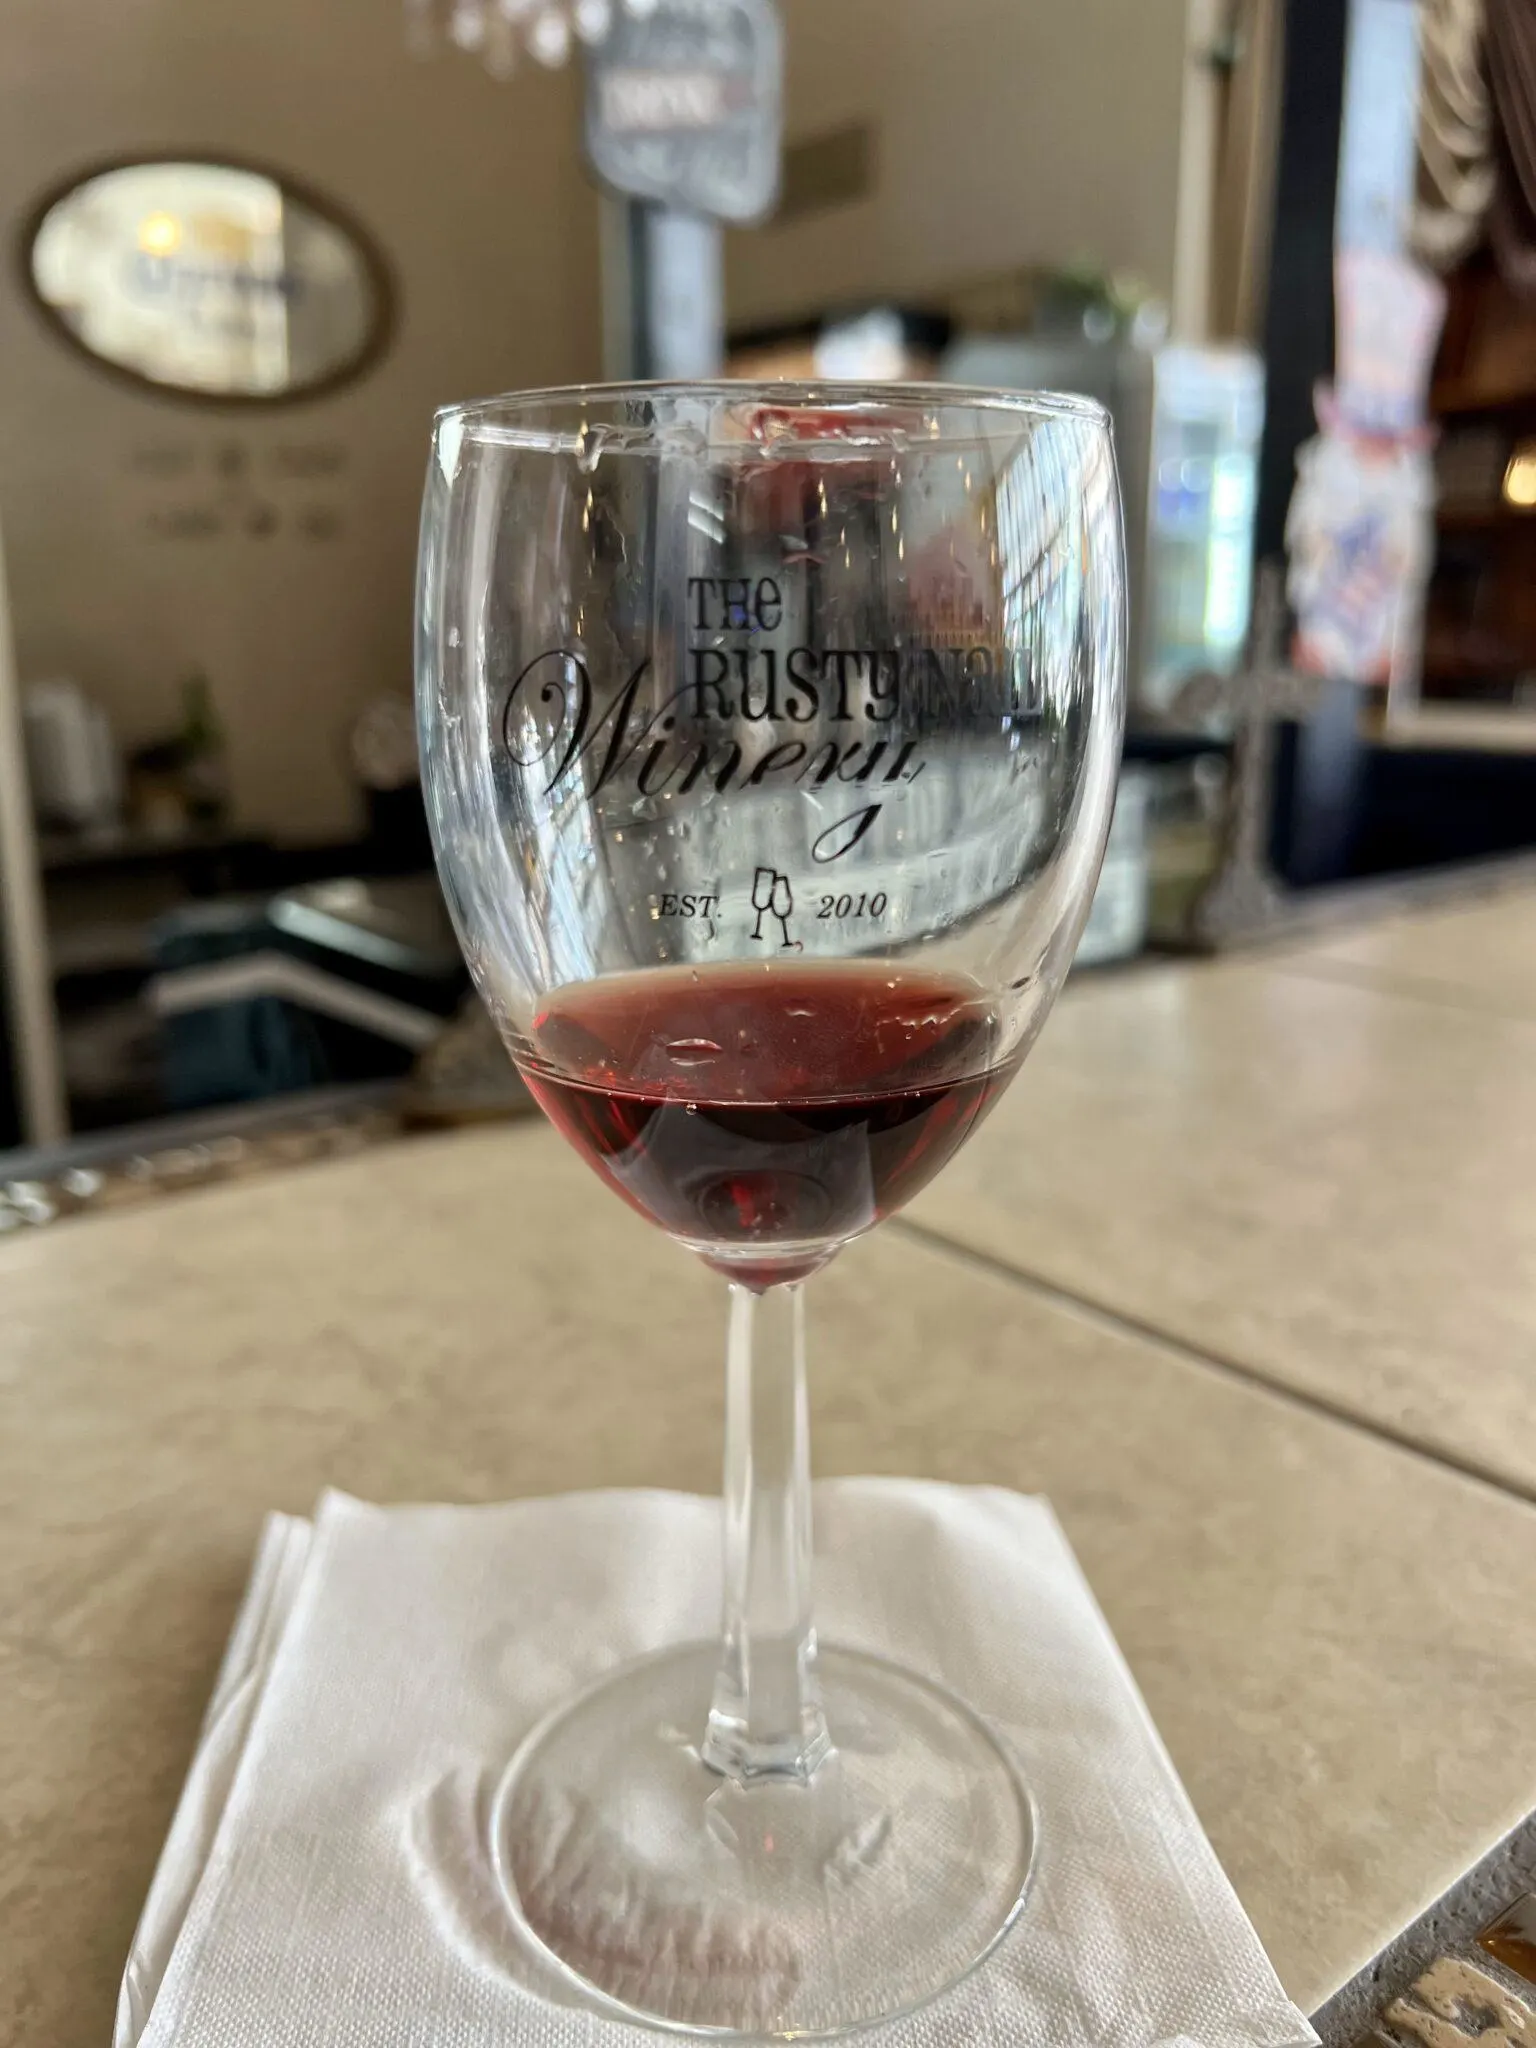 Glass of wine on a napkin